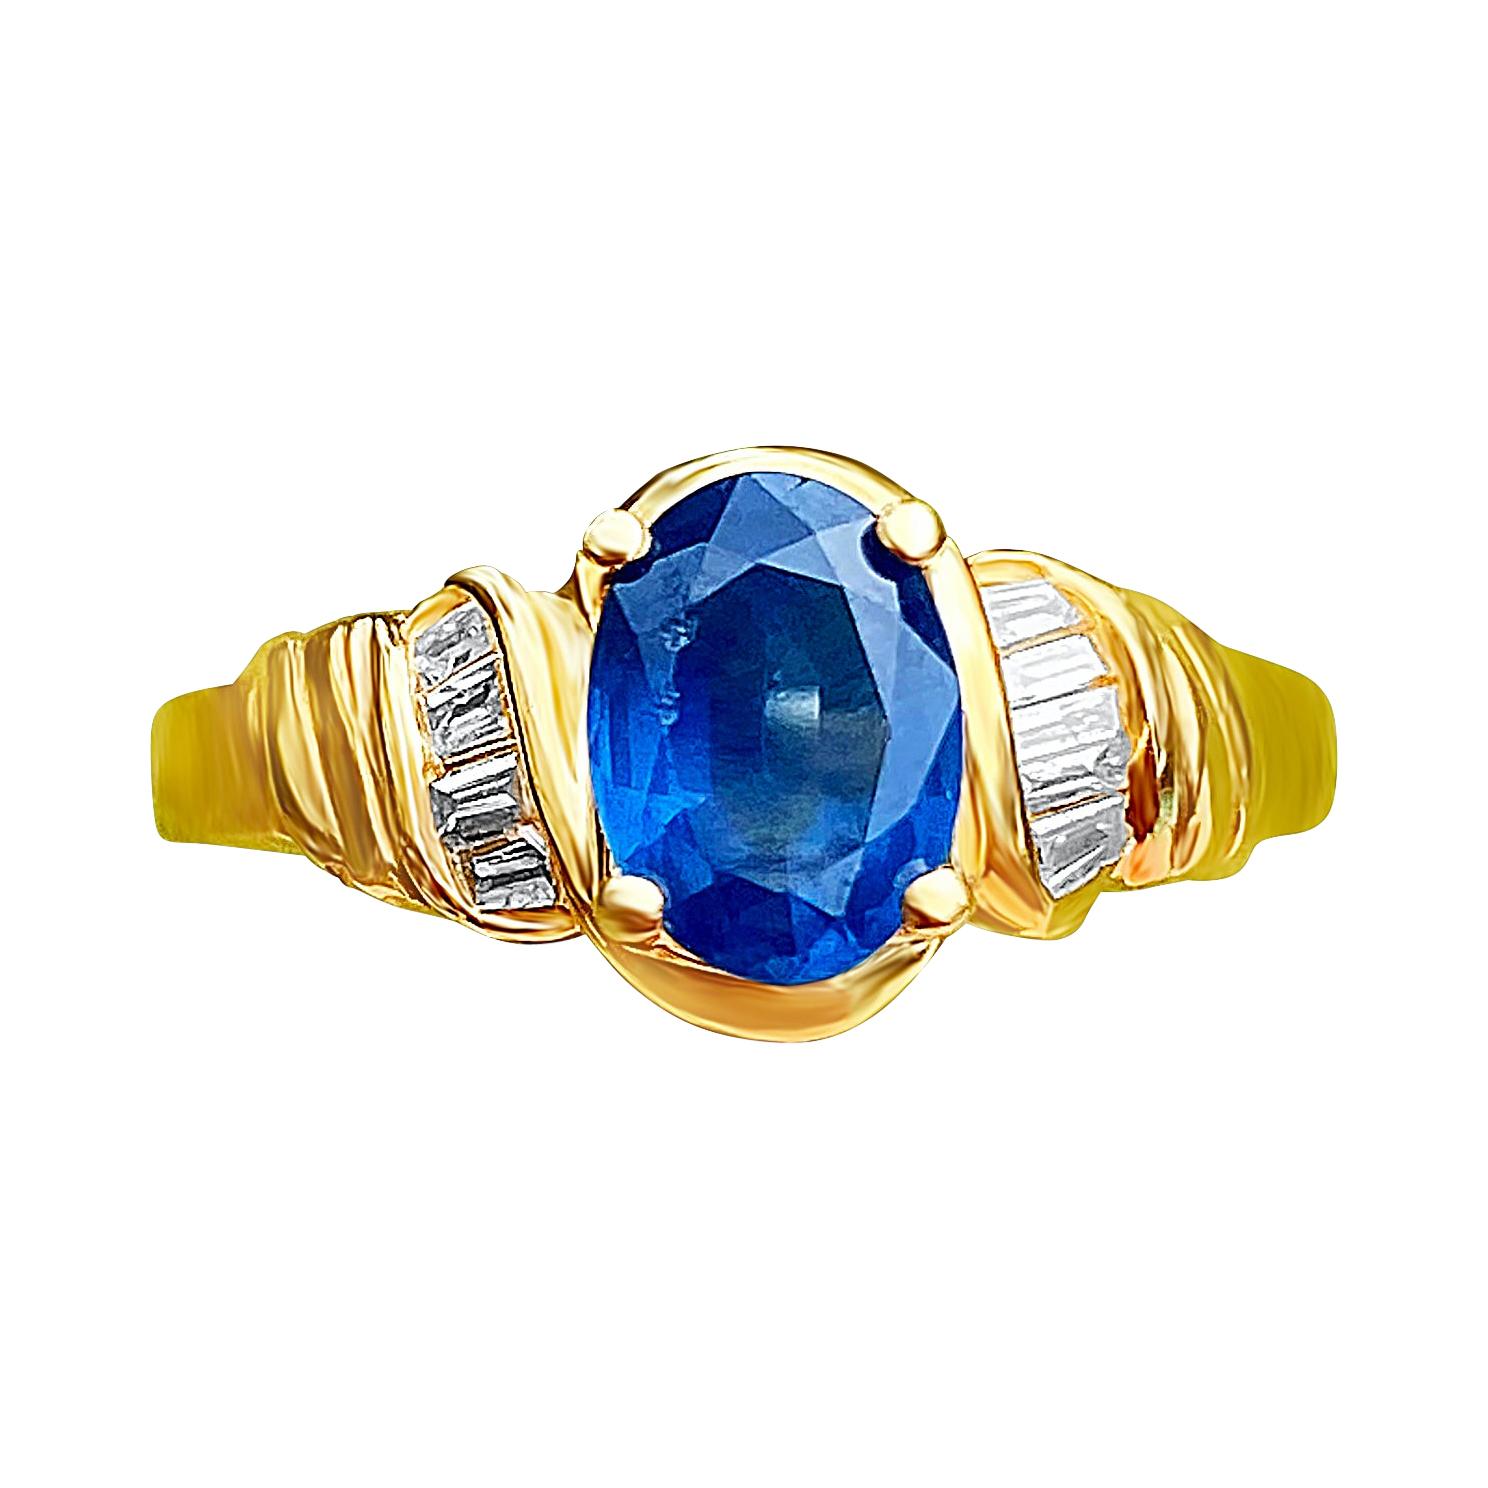 1.22 Carat Oval Cut Ceylon Sapphire and Diamond Ring 14k Gold Sri Lanka Sapphire For Sale